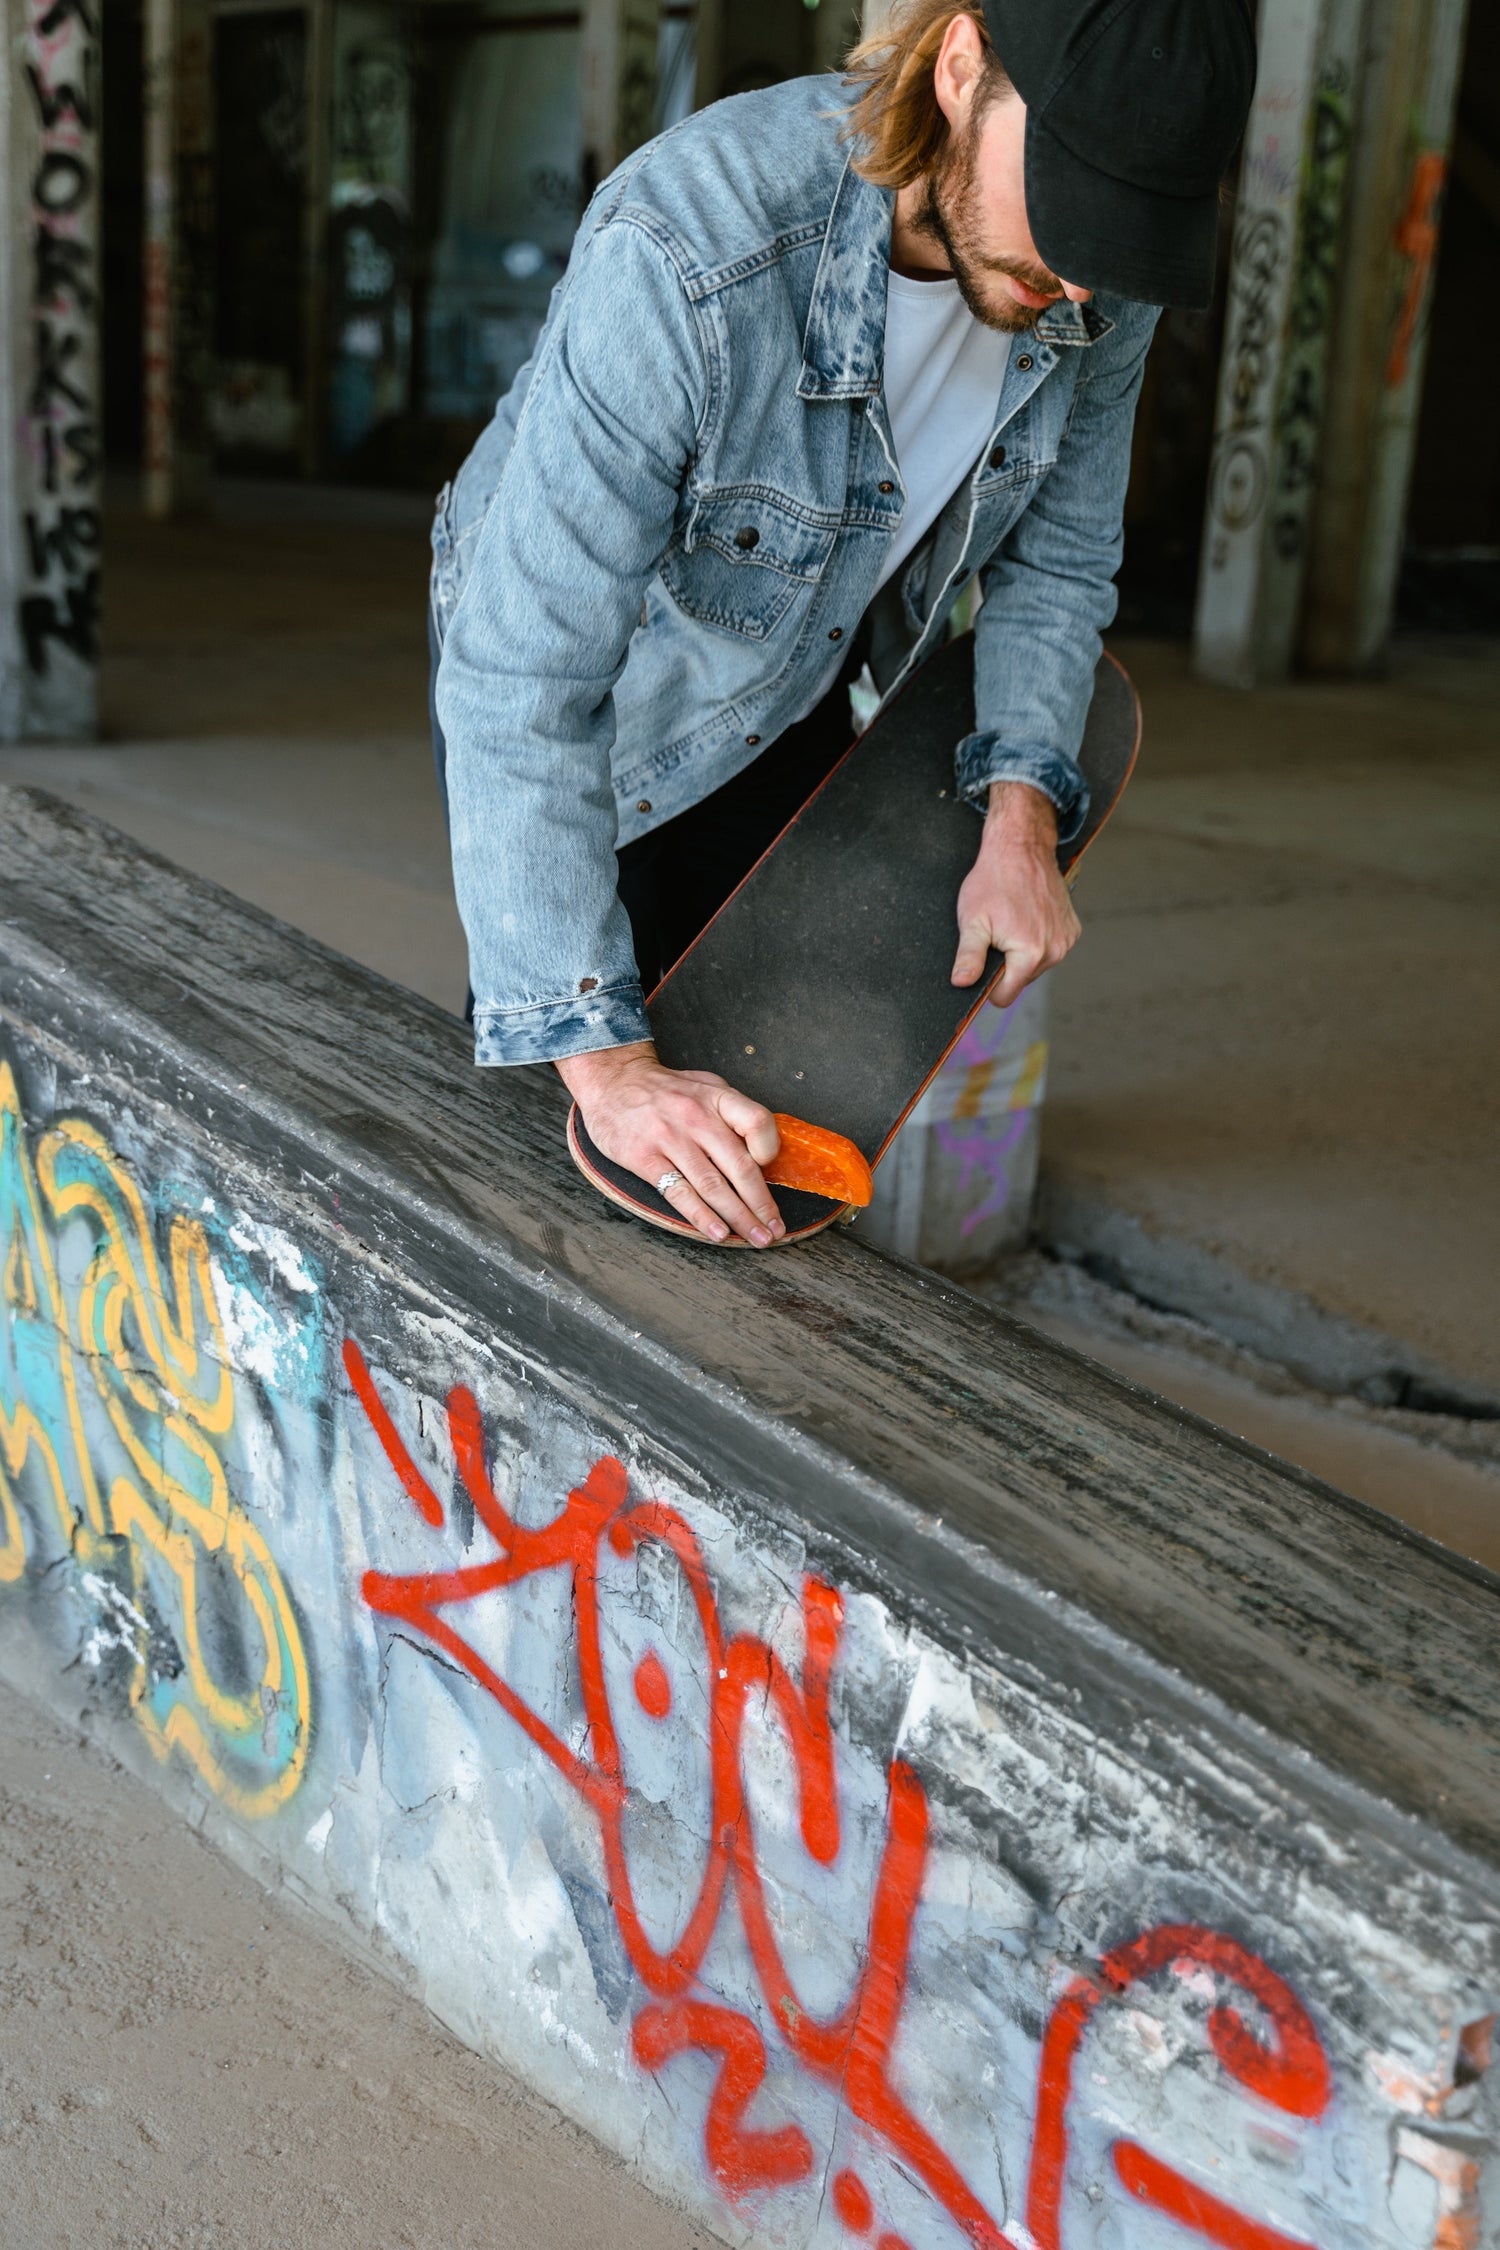 How to apply skate wax on curbs, rails, and ledges